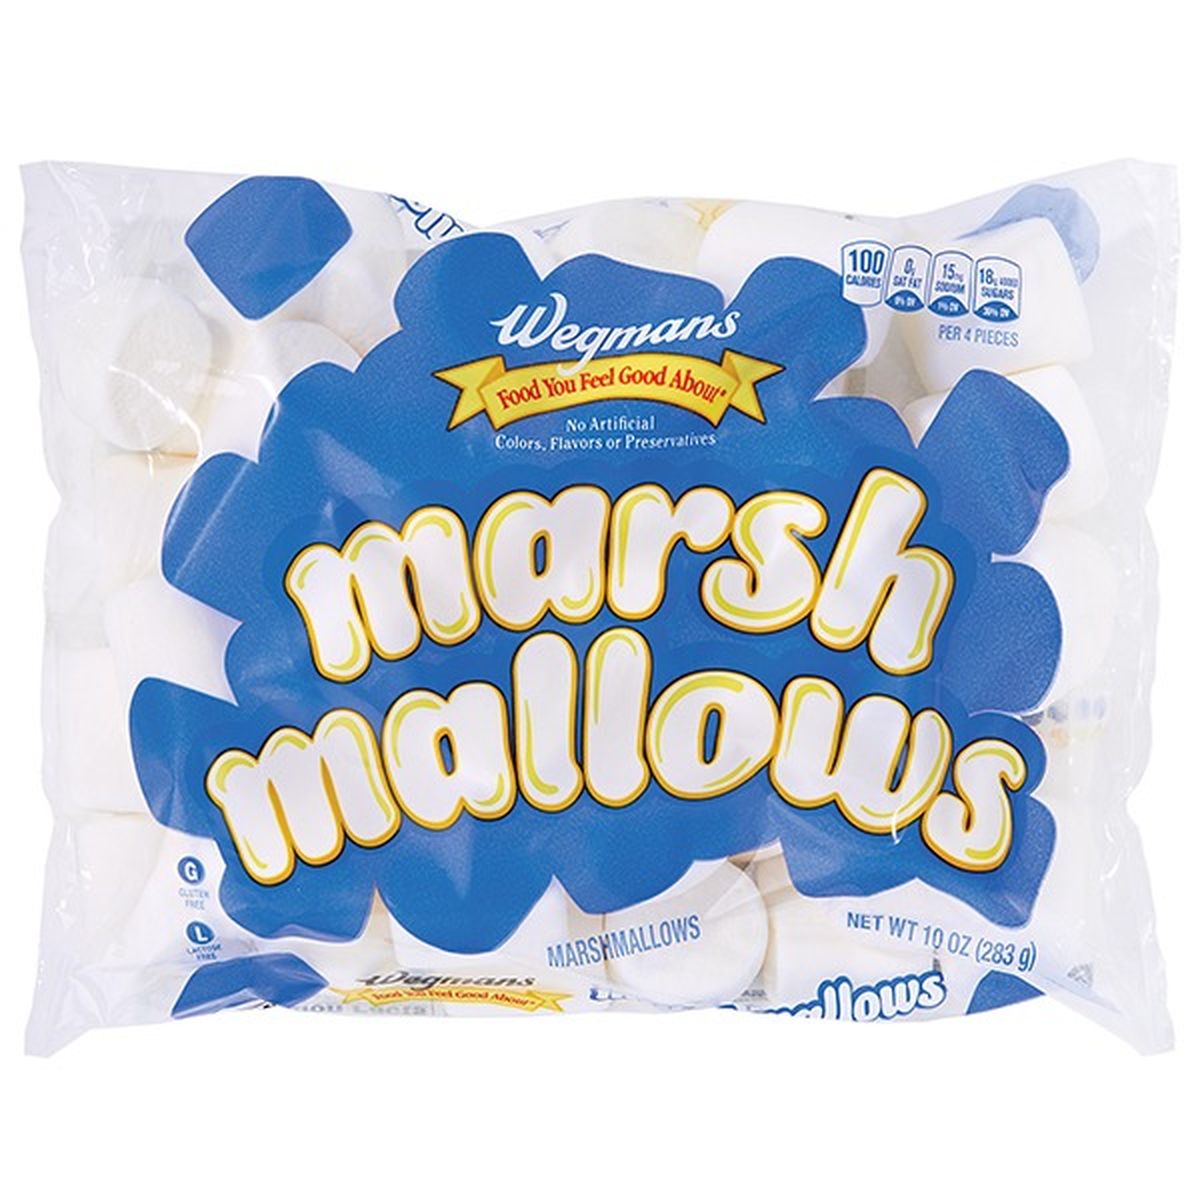 Calories in Wegmans Marshmallows